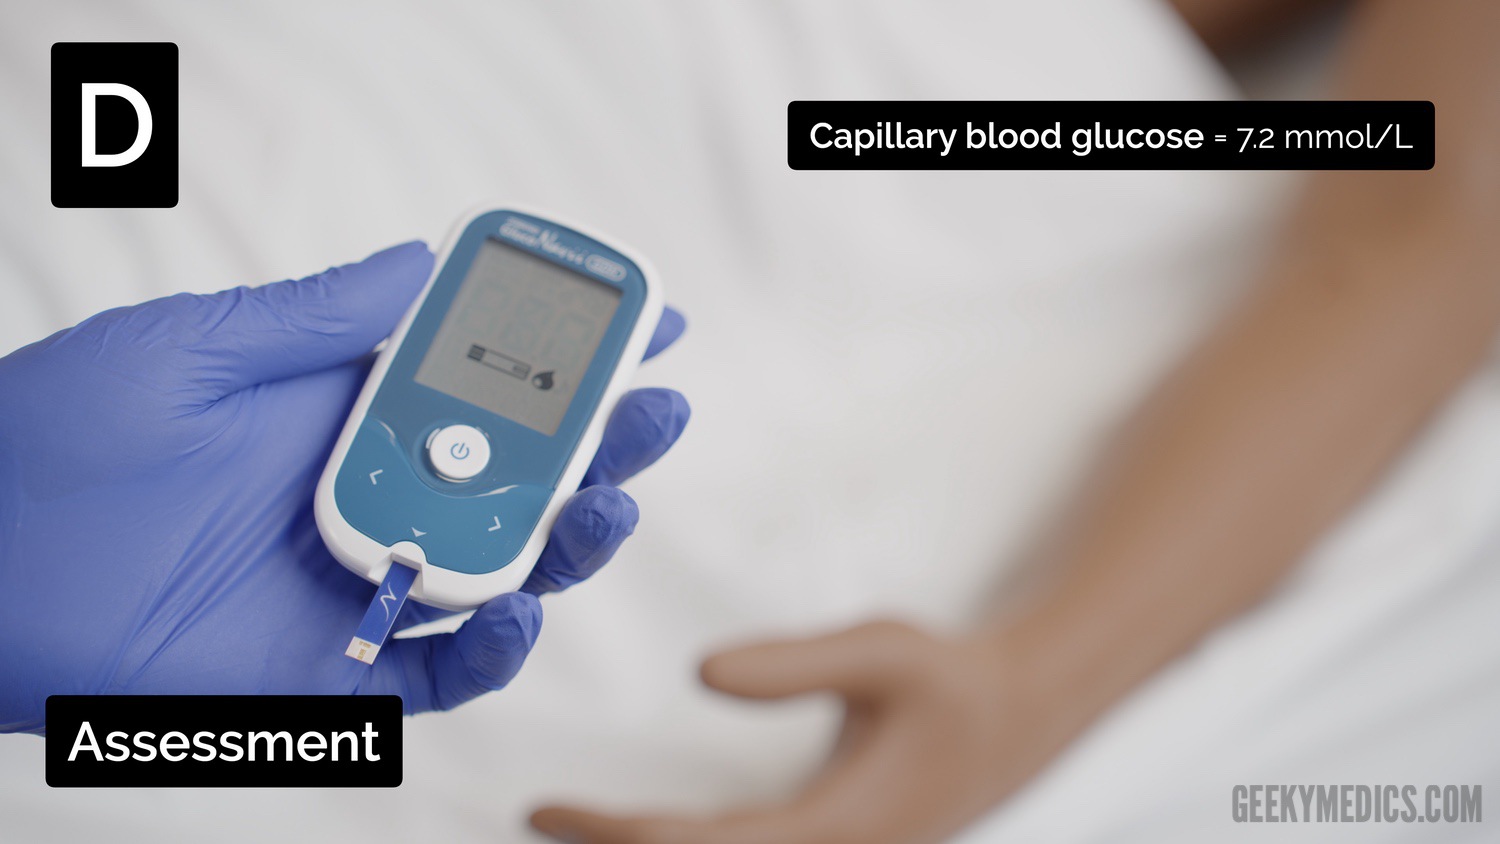 Consider measuring capillary blood glucose